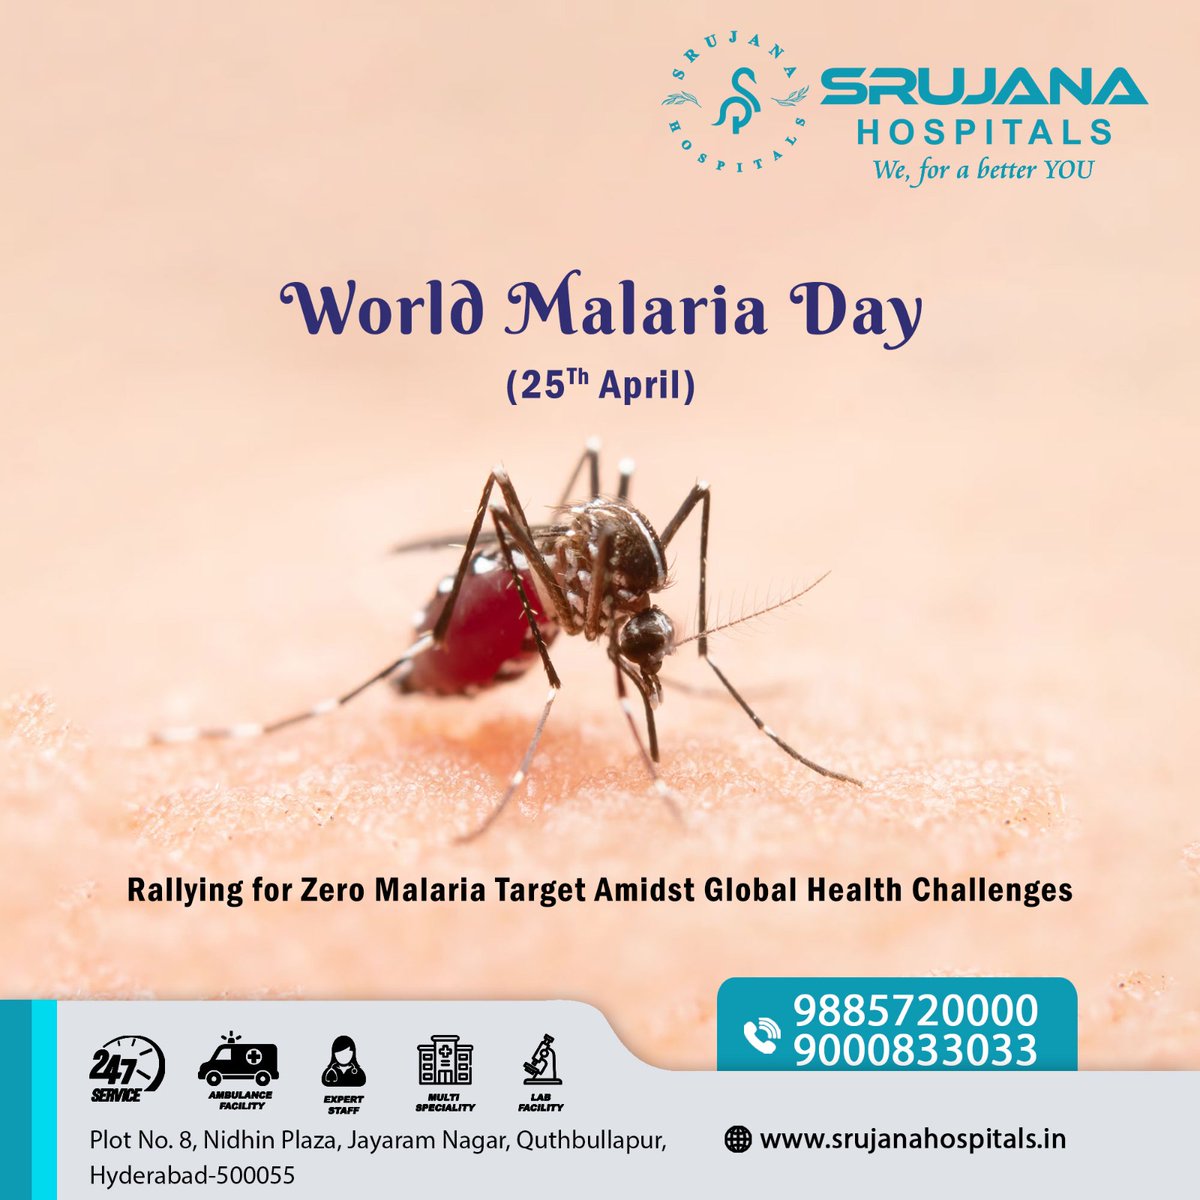 From awareness to action, let's make malaria a thing of the past. End Malaria.

#WorldMalariaDay #EndMalaria #MalariaAwareness #MalariaFreeFuture #FightAgainstMalaria #MalariaPrevention #MalariaTreatment #MalariaControl #MosquitoNetCampaign #Srujanahospitals